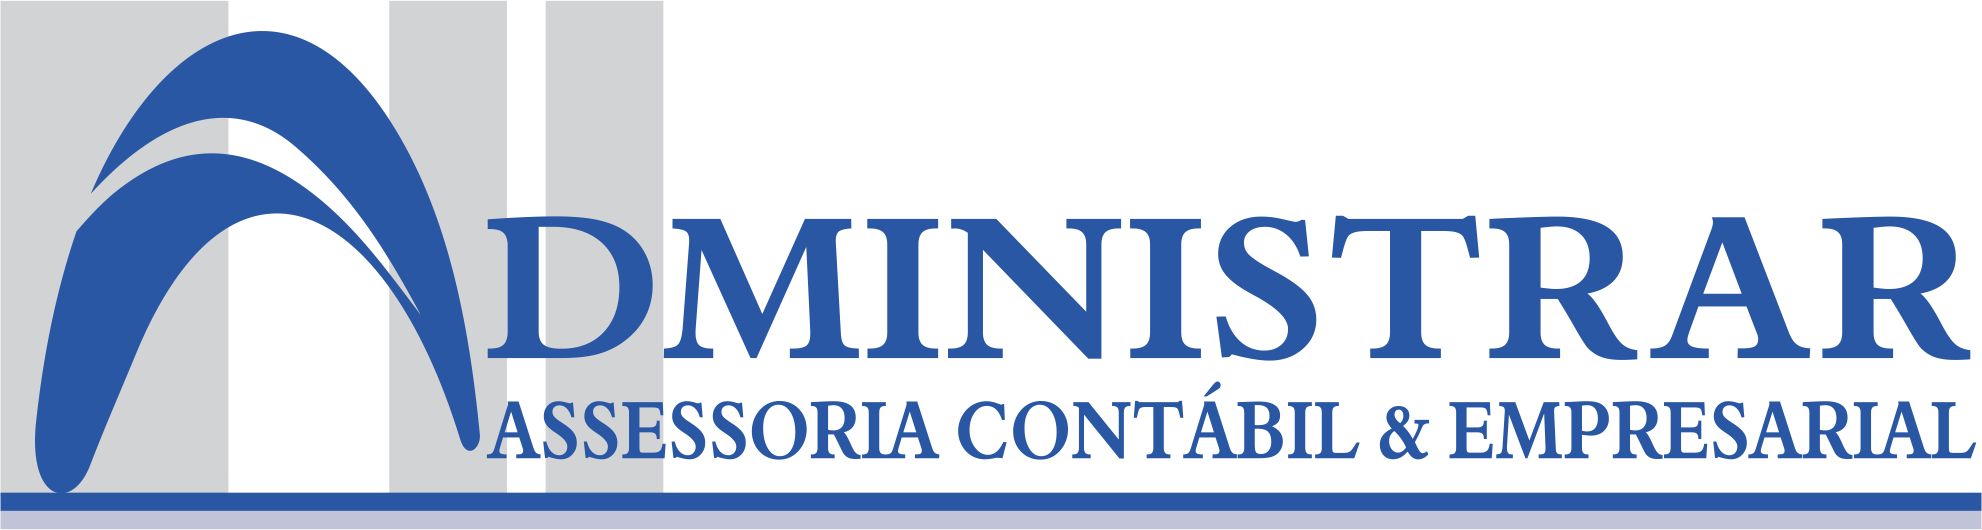 Administrar_Logo.jpg